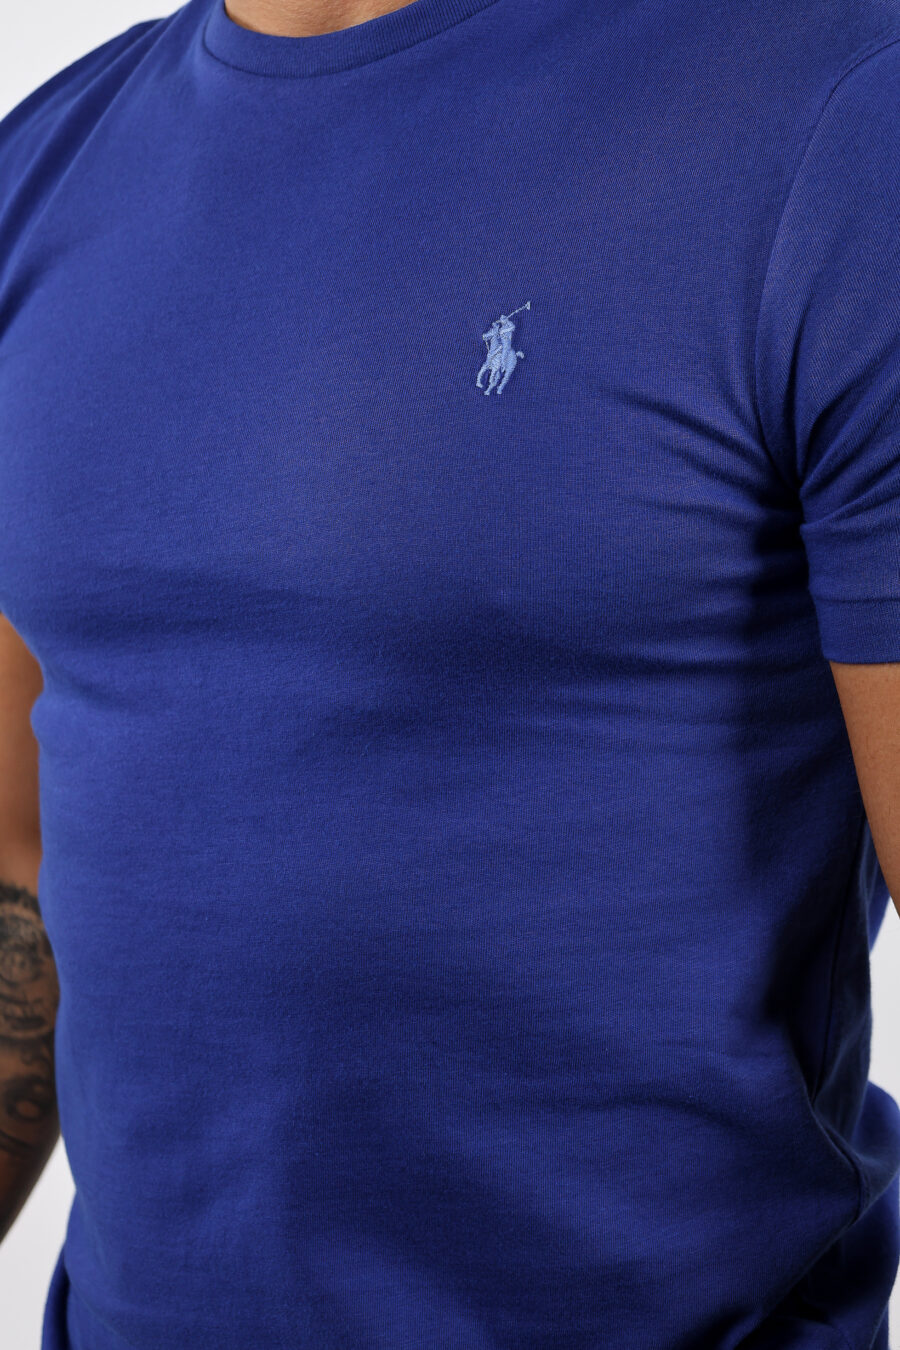 Camiseta azul con minilogo "polo" - BLS Fashion 283